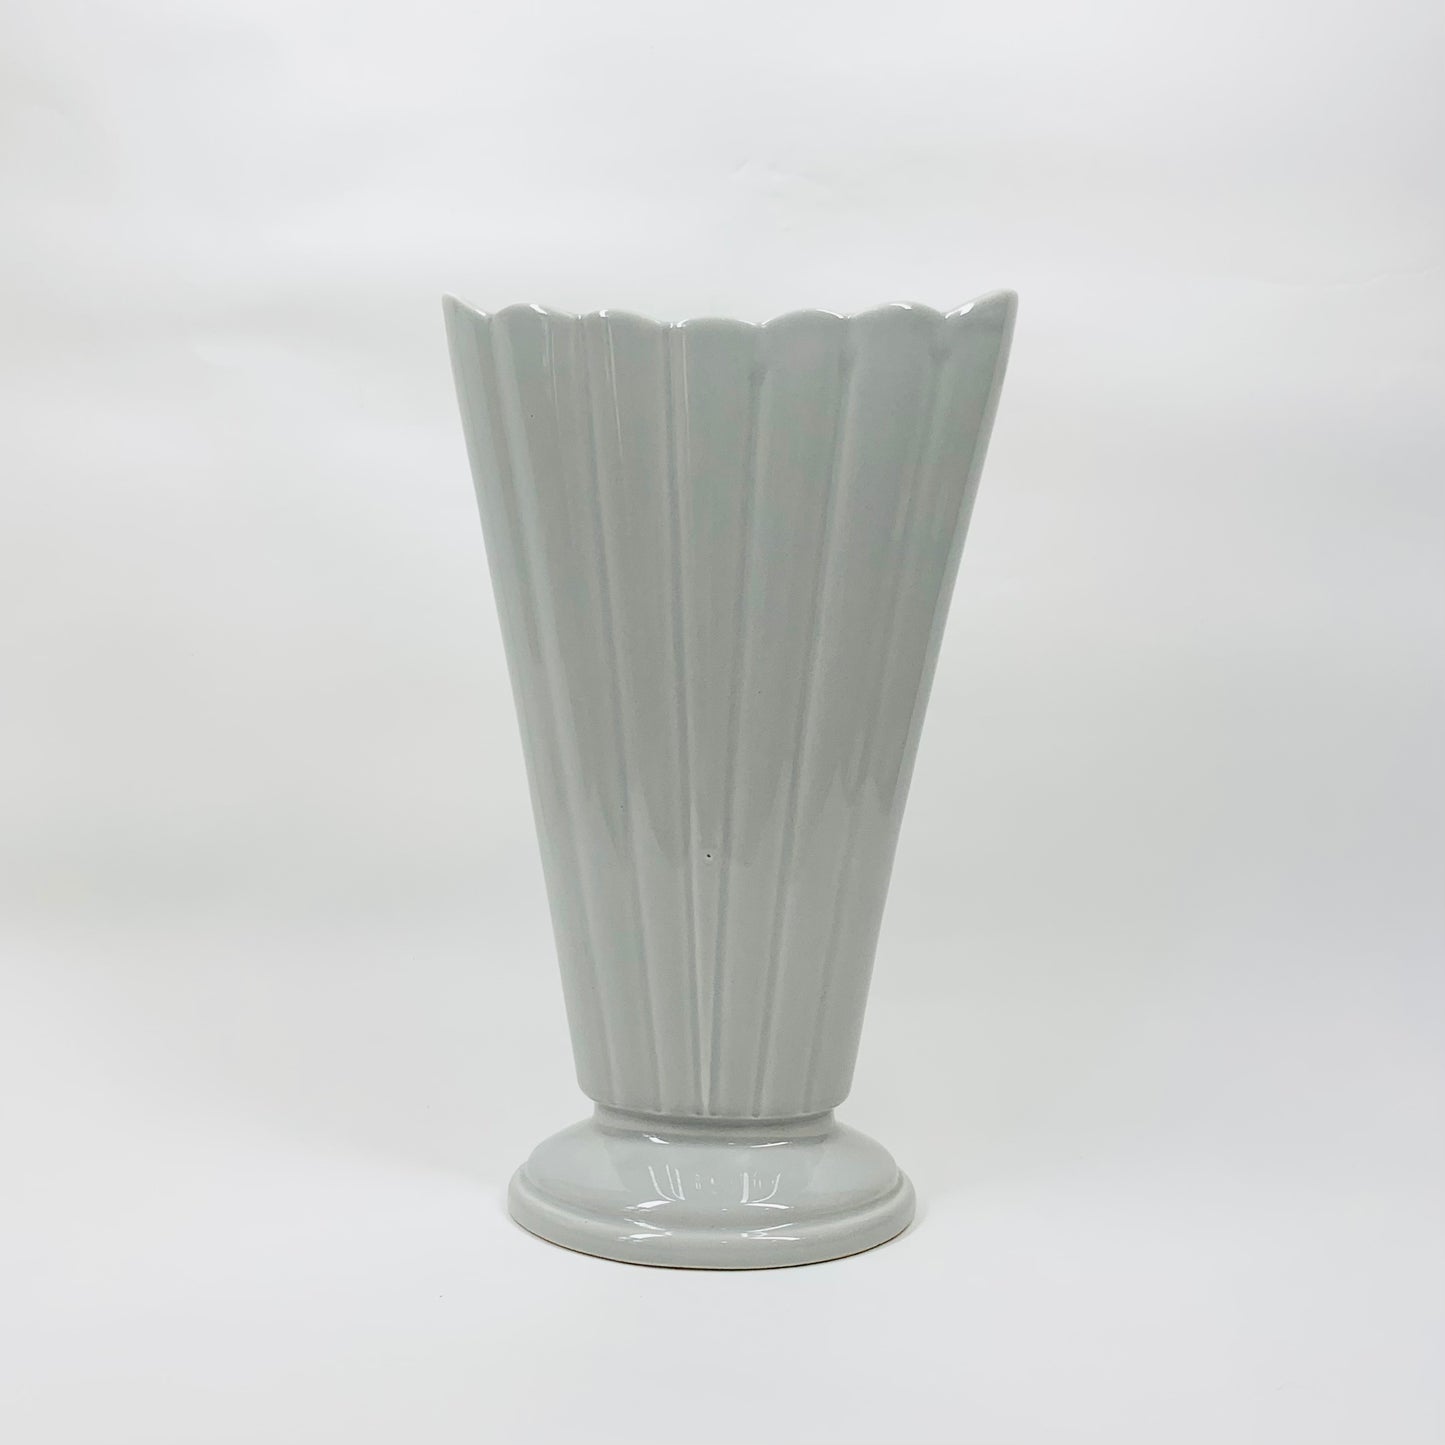 Rare vintage Japanese grey porcelain Art Deco revival fan vase